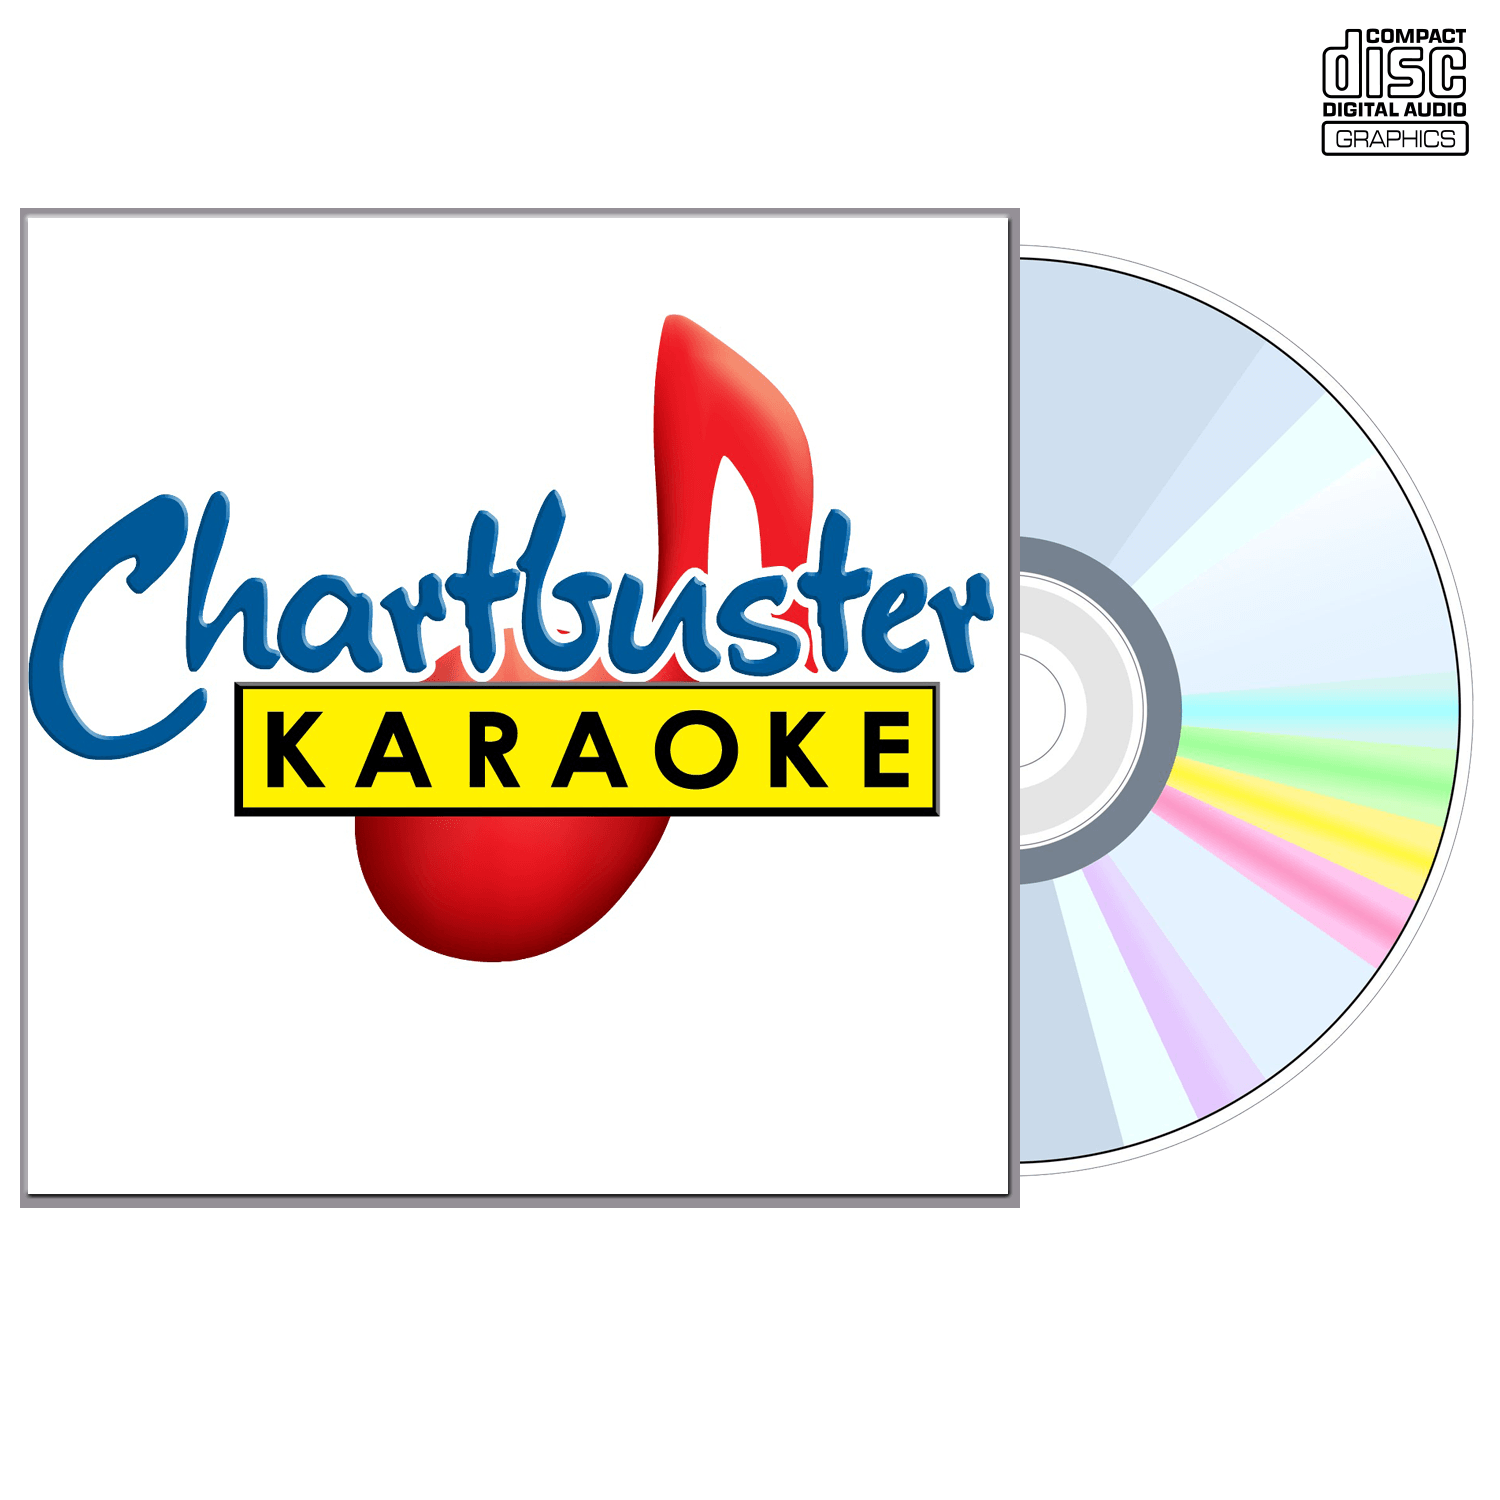 Tammy Cochran - CD+G - Chartbuster Karaoke - Karaoke Home Entertainment